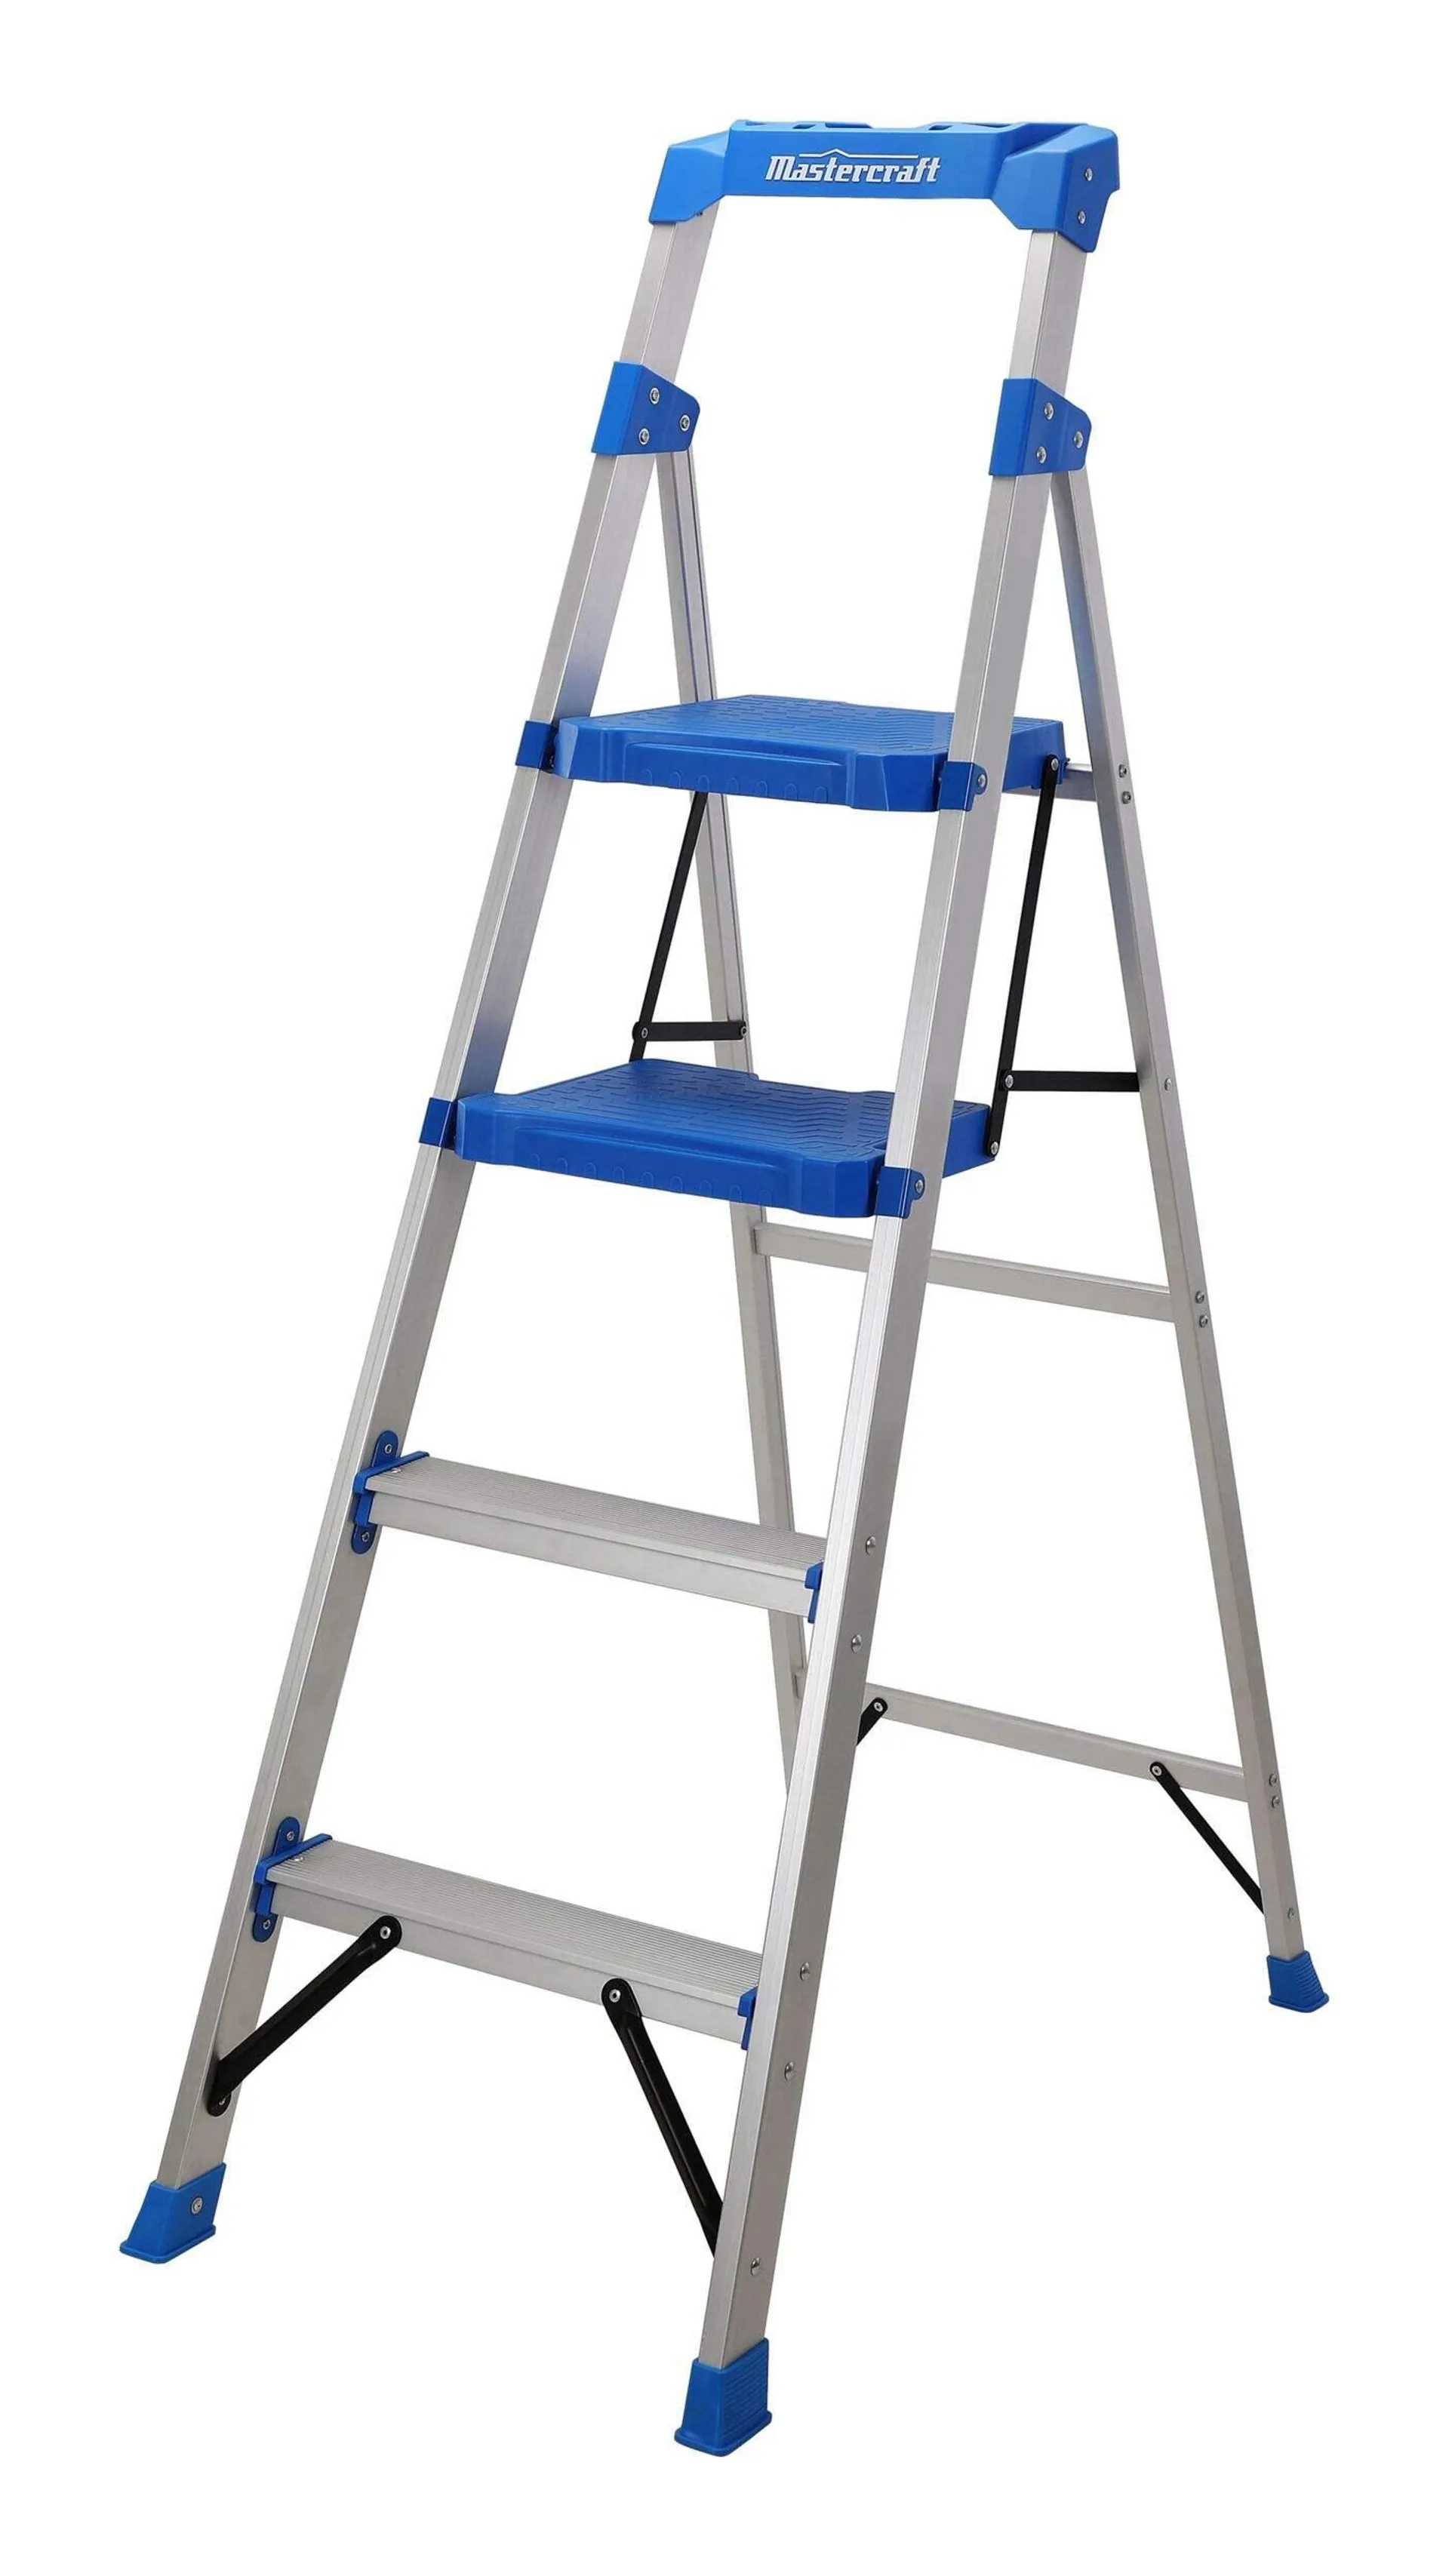 Mastercraft Grade 1 Aluminum Compact Ladder, 5.5-ft, 250-lb